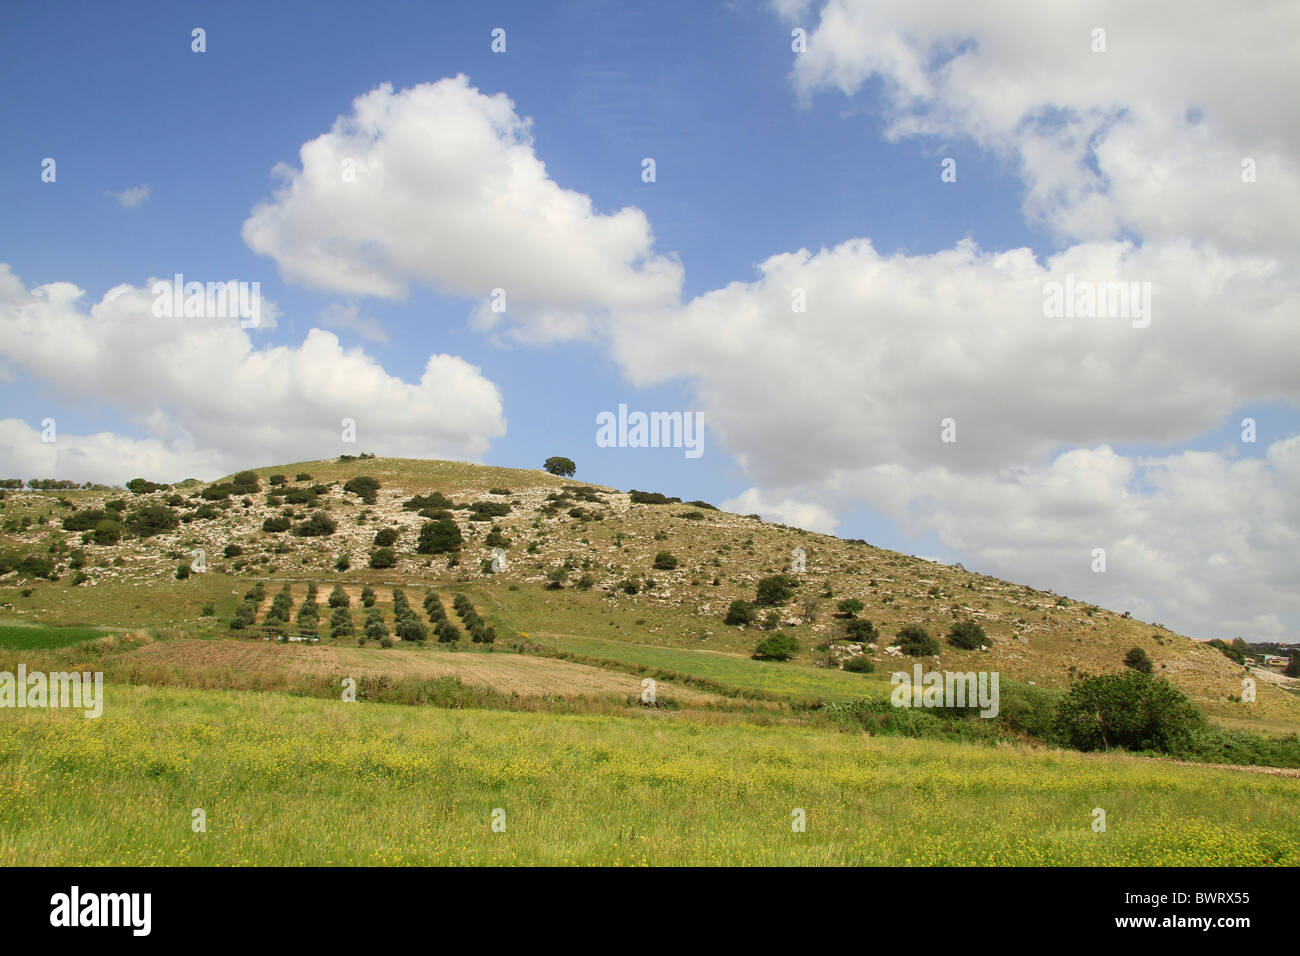 Israel, Lower Galilee, Alil Hill overlooking Wadi Zippori Stock Photo